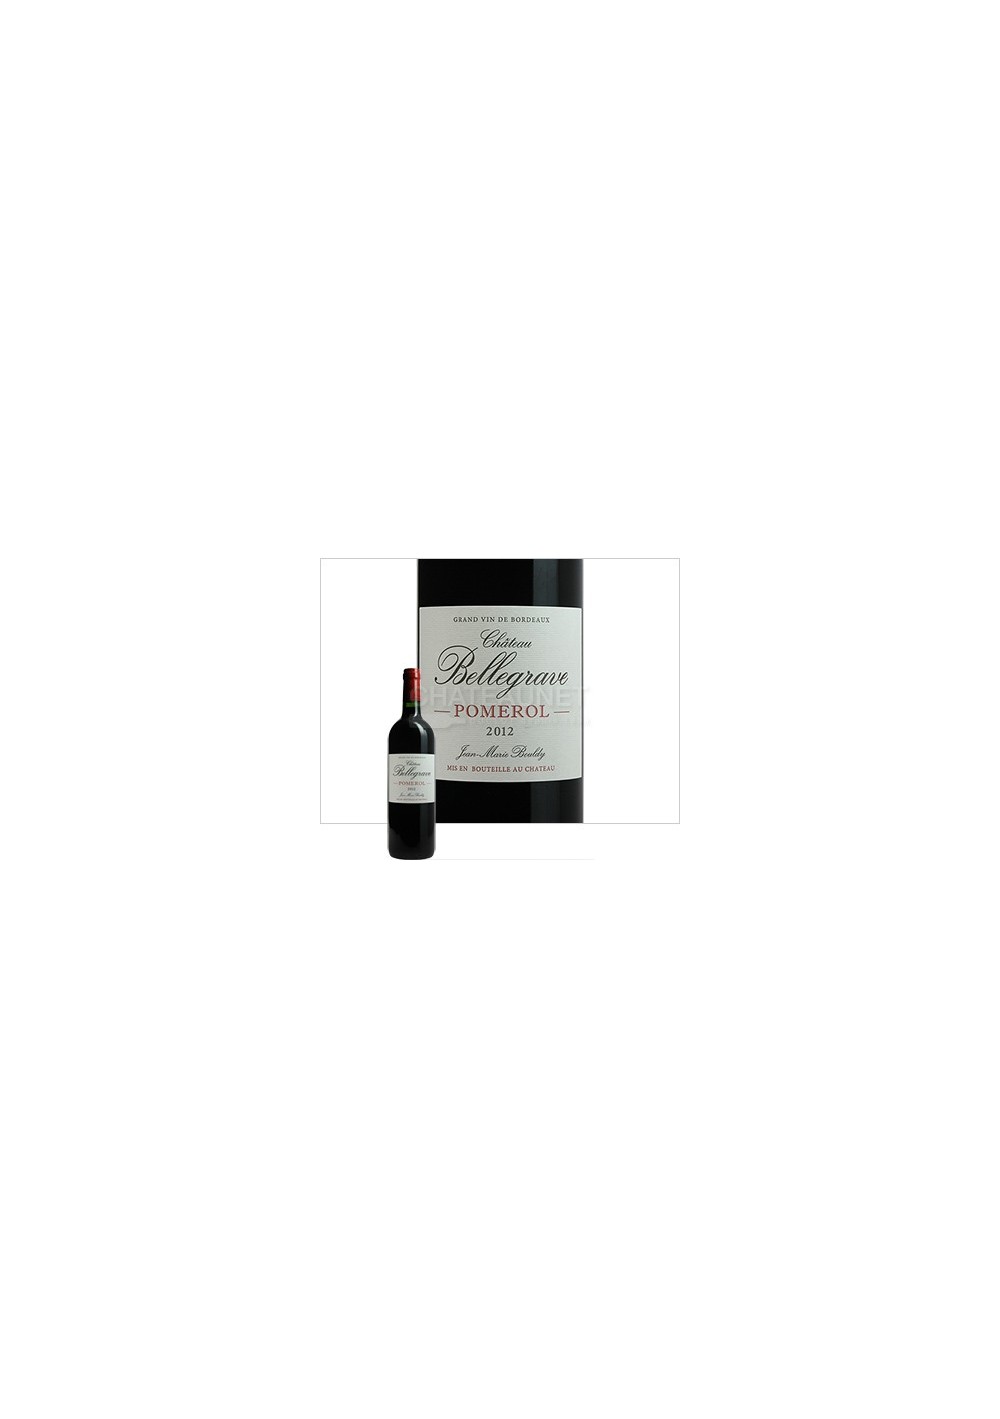 Château Bellegrave 2012 - Pomerol - organic wine